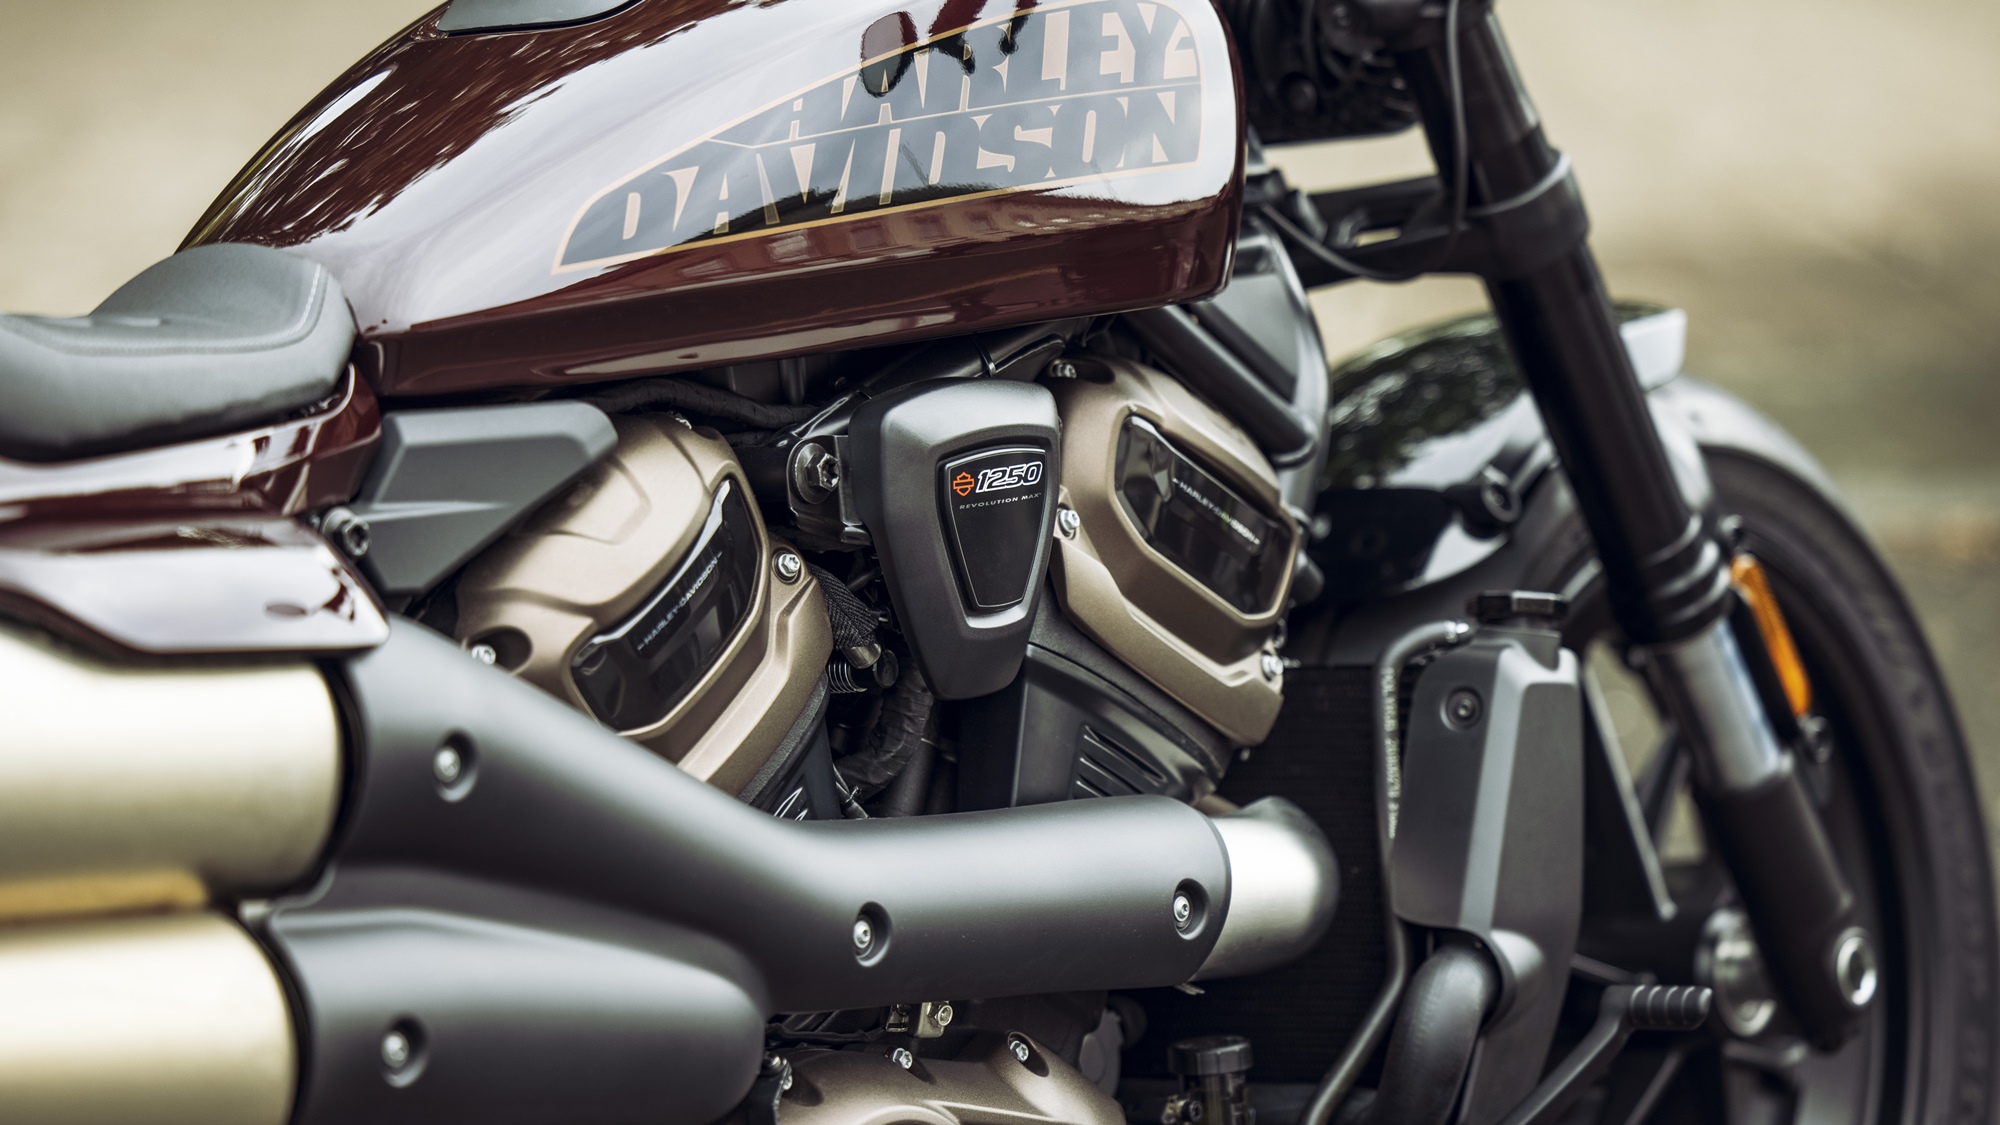 2021 Harley Davidson Wallpapers - Wallpaper Cave